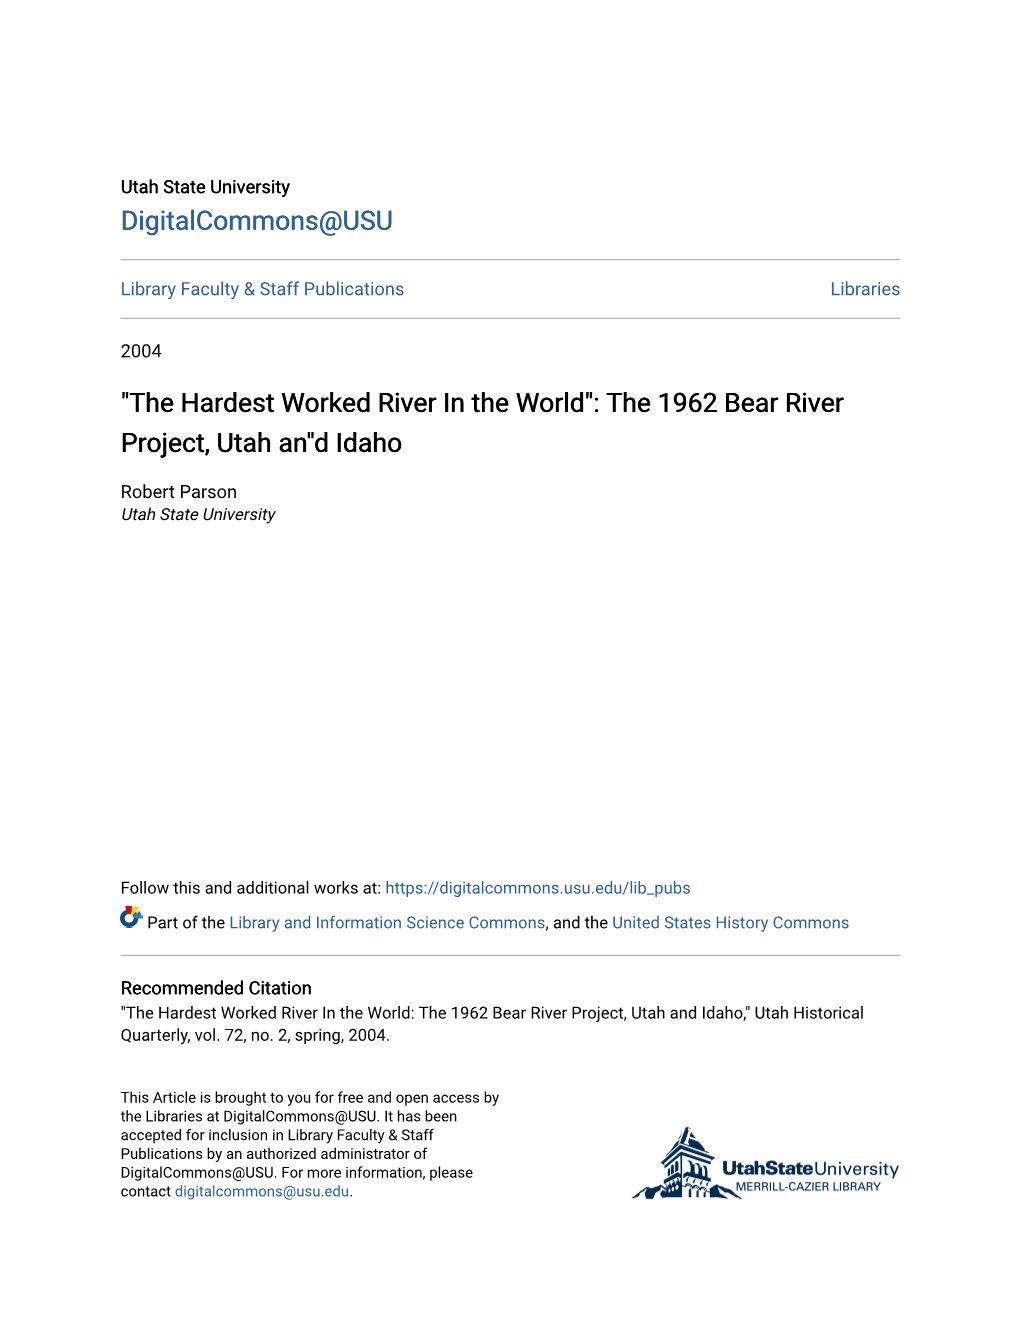 The 1962 Bear River Project, Utah An"D Idaho